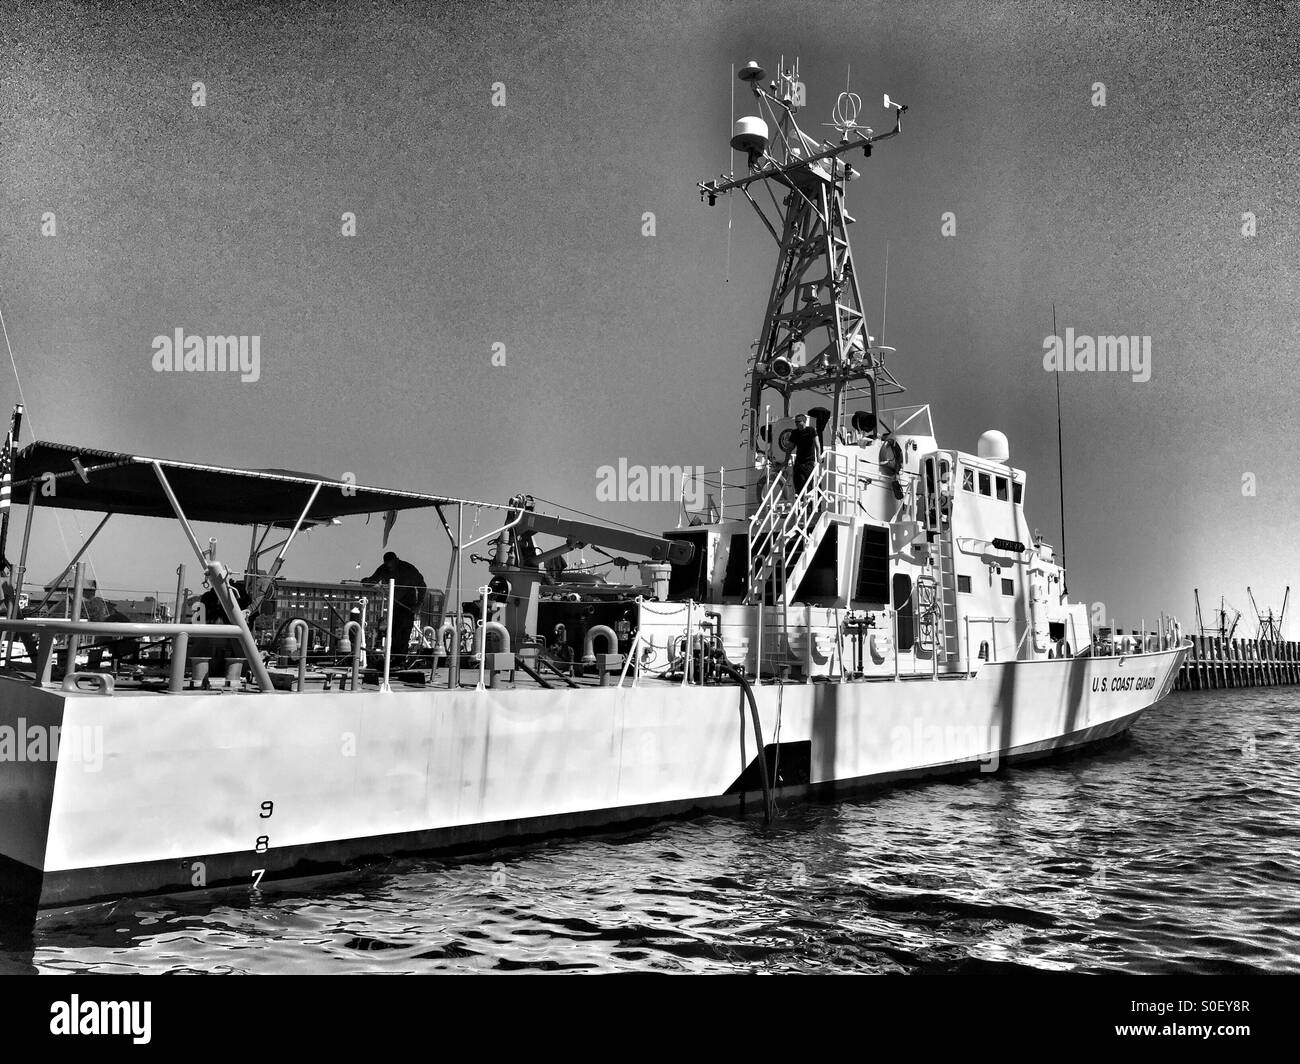 Coast Guard ship in harbor Stock Photo